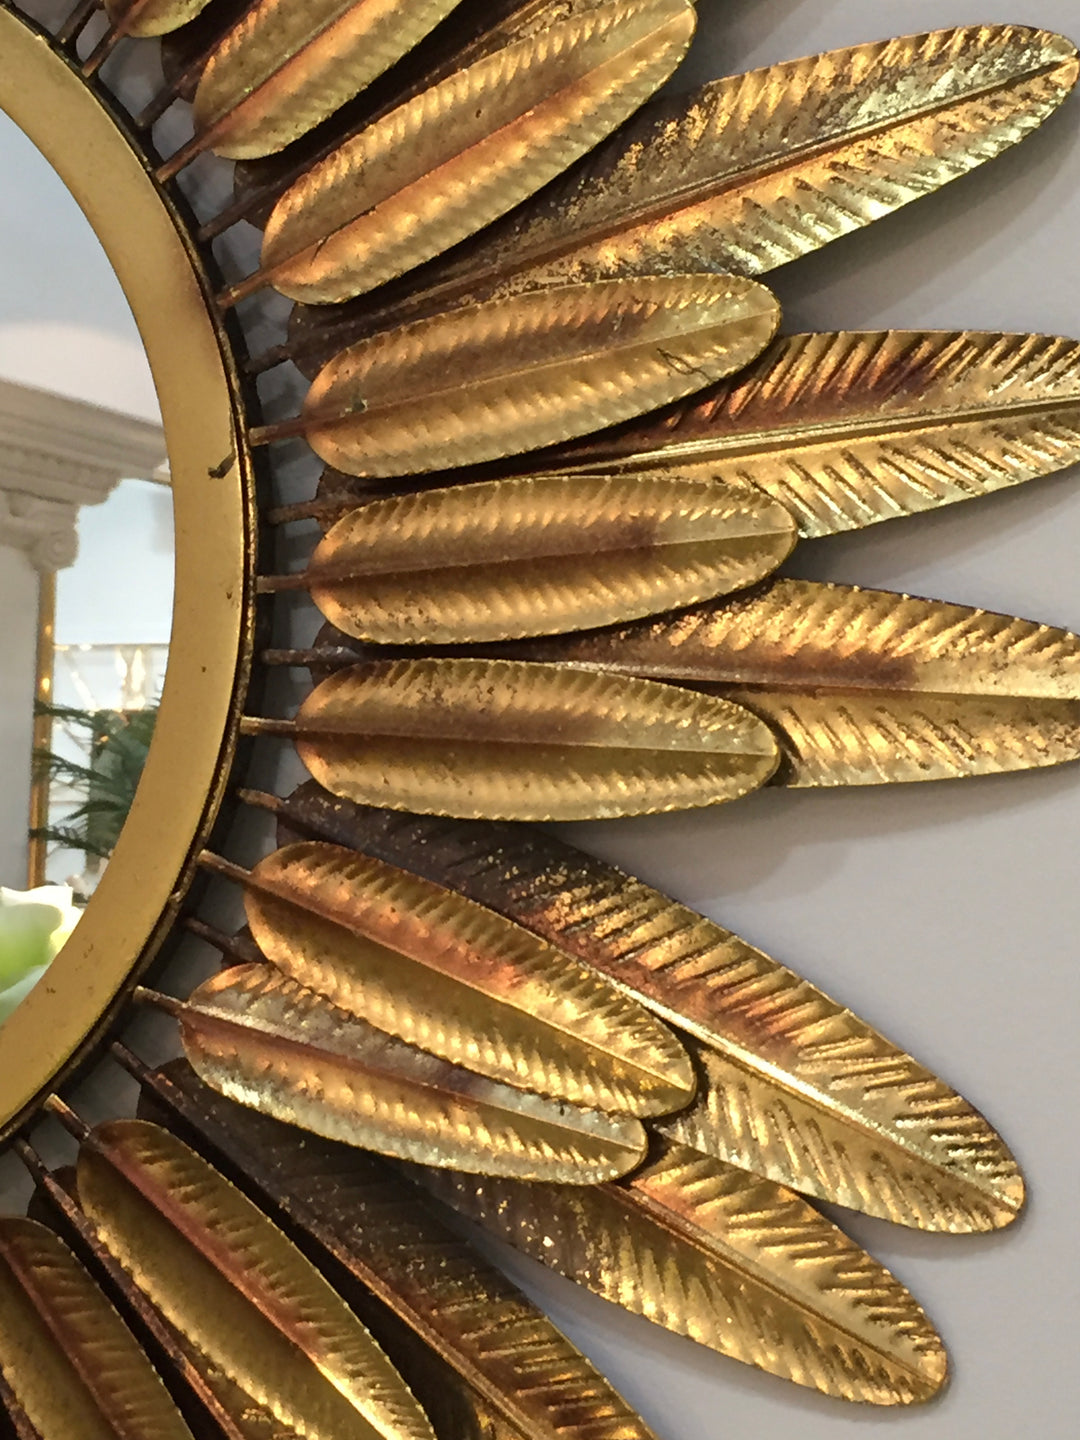 Gold Sunburst Wall Mirror Feather Effect, 75cm